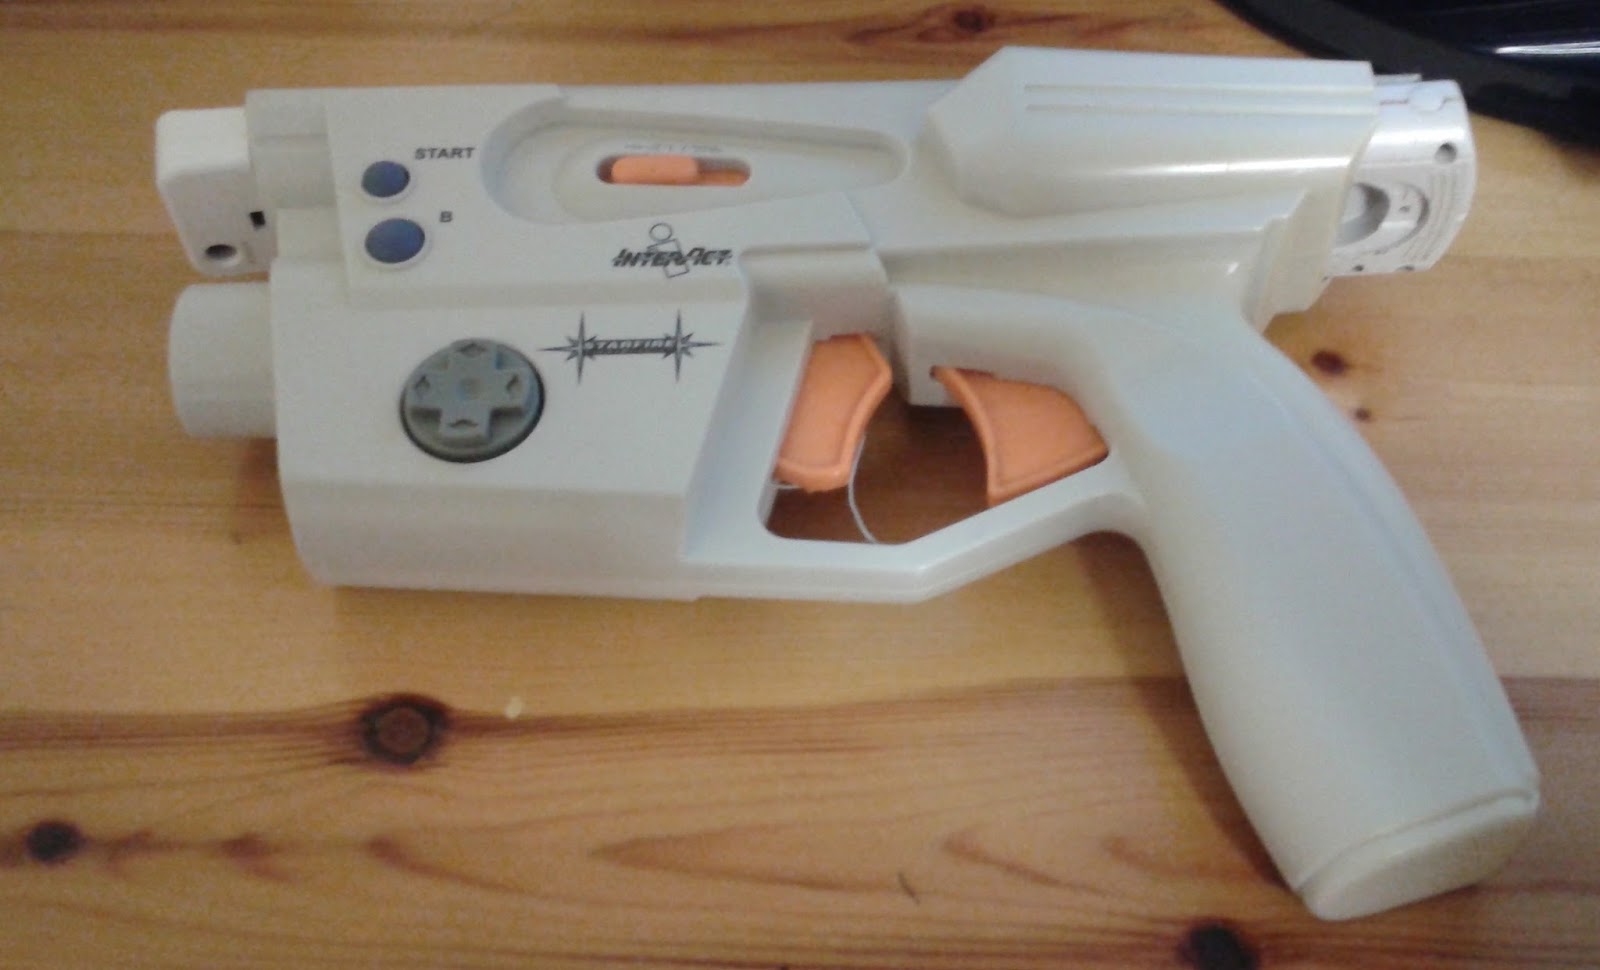 The Junkyard: LightConn: A Dreamcast Gun That Works With